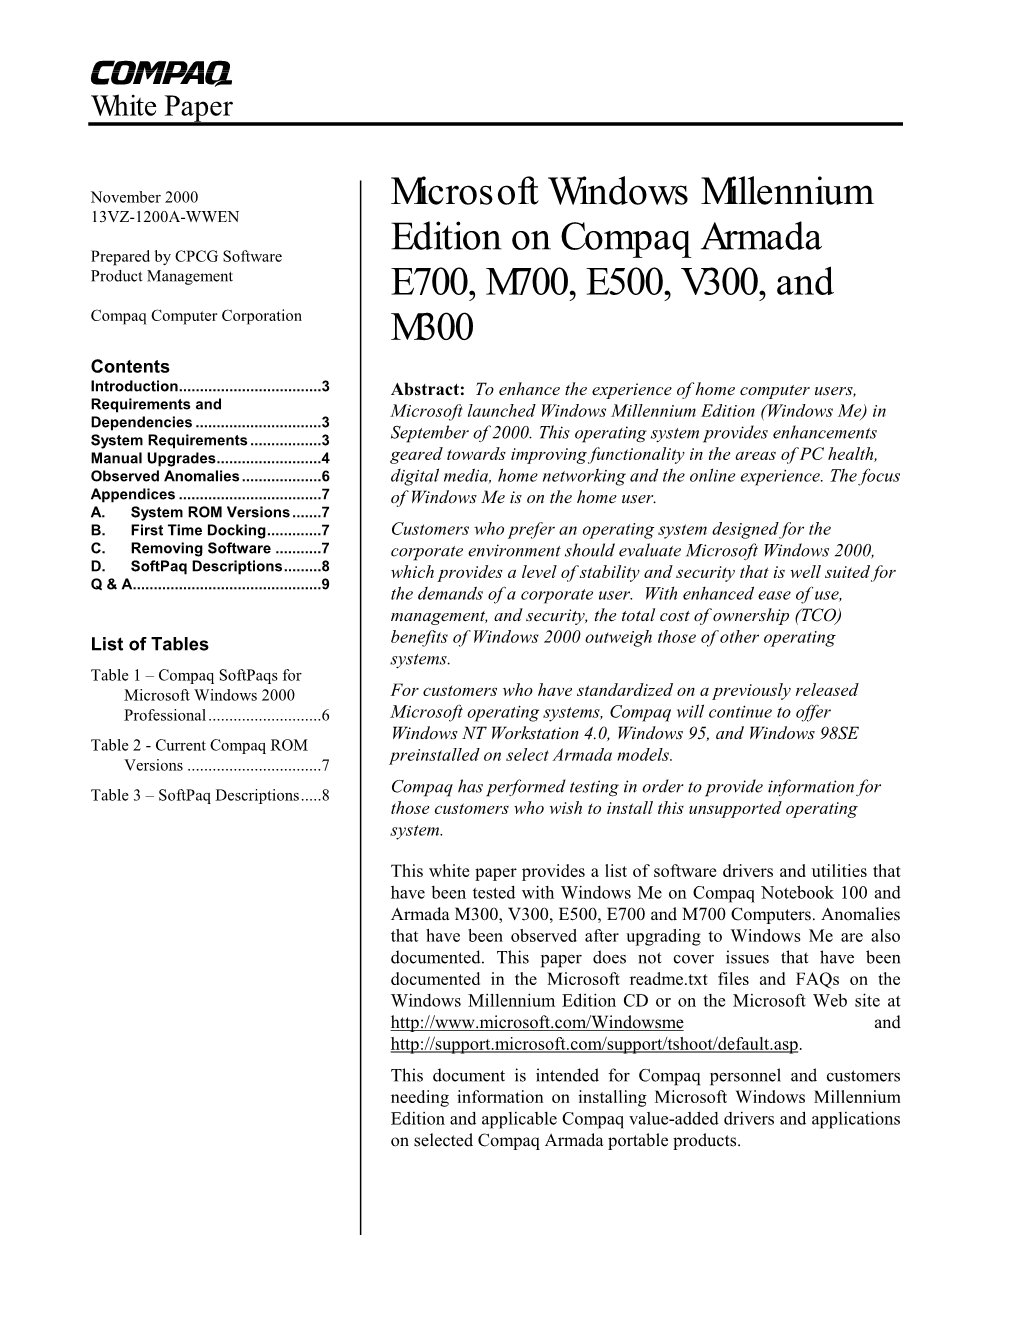 Microsoft Windows Millennium Edition on Compaq Armada E700, M700, E500, V300, and M300 2